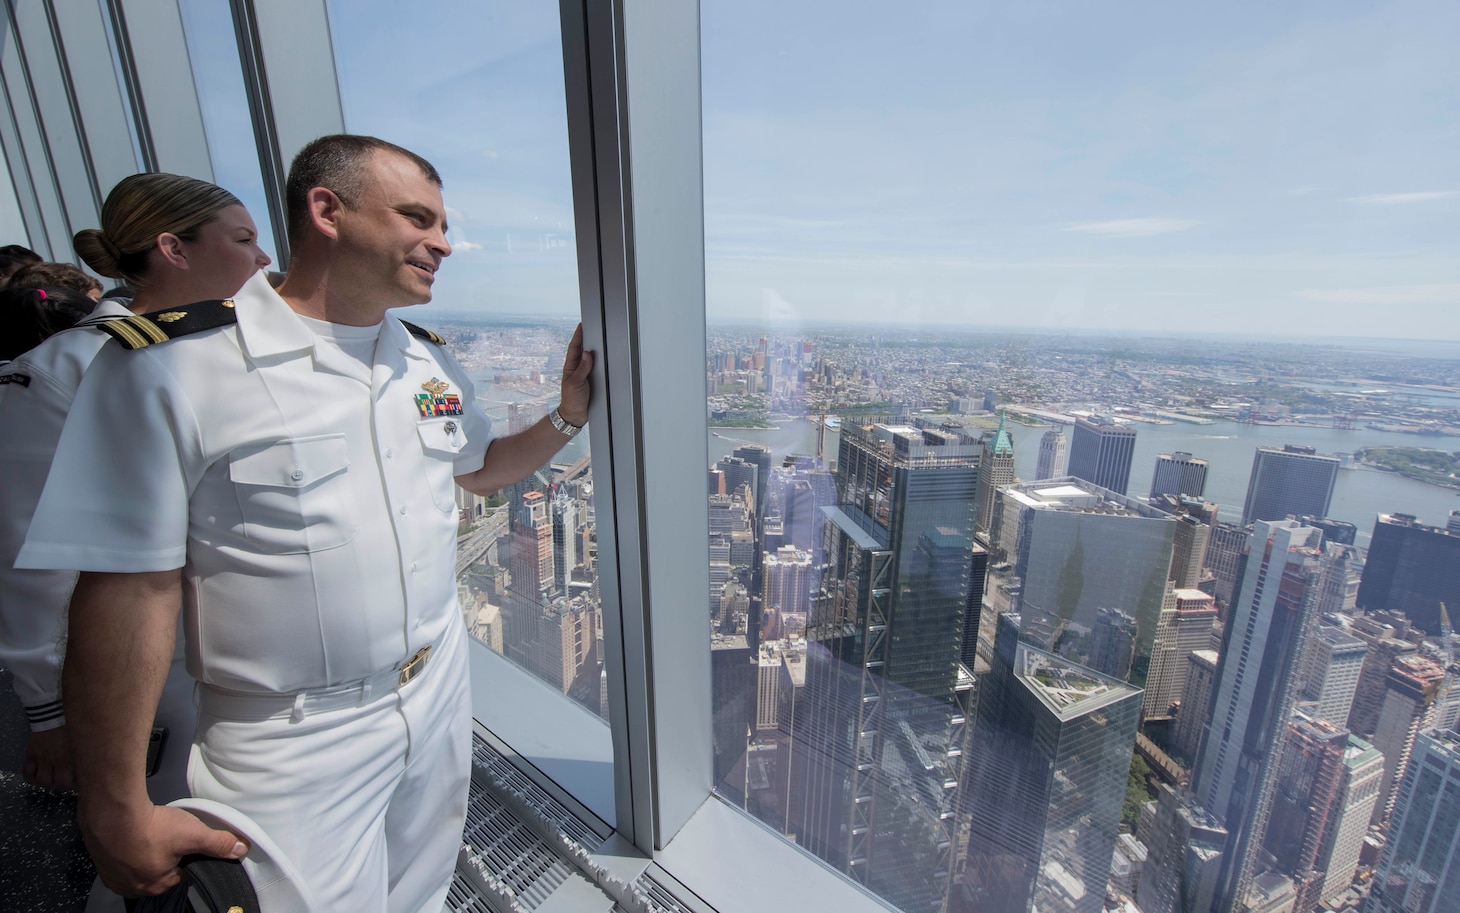 Fleet Week 2019, naval officer looks out window of skyscraper.